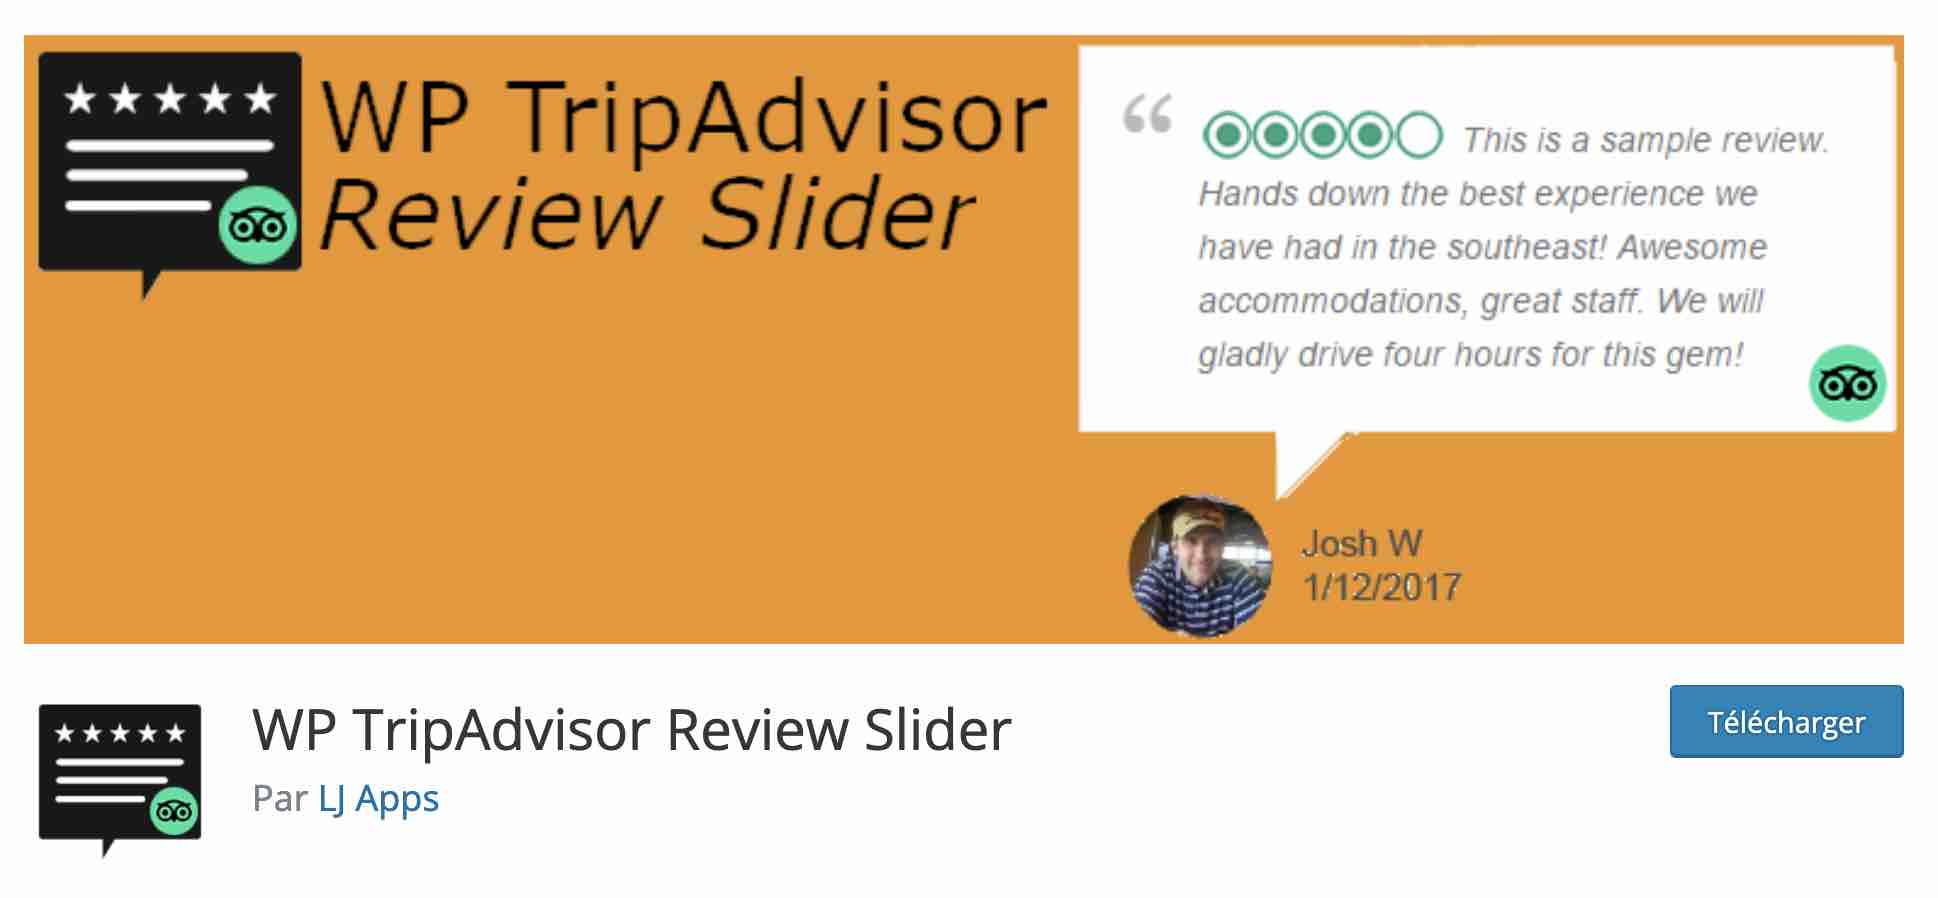 The WP TripAdvisor Review Slider extension on WordPress.